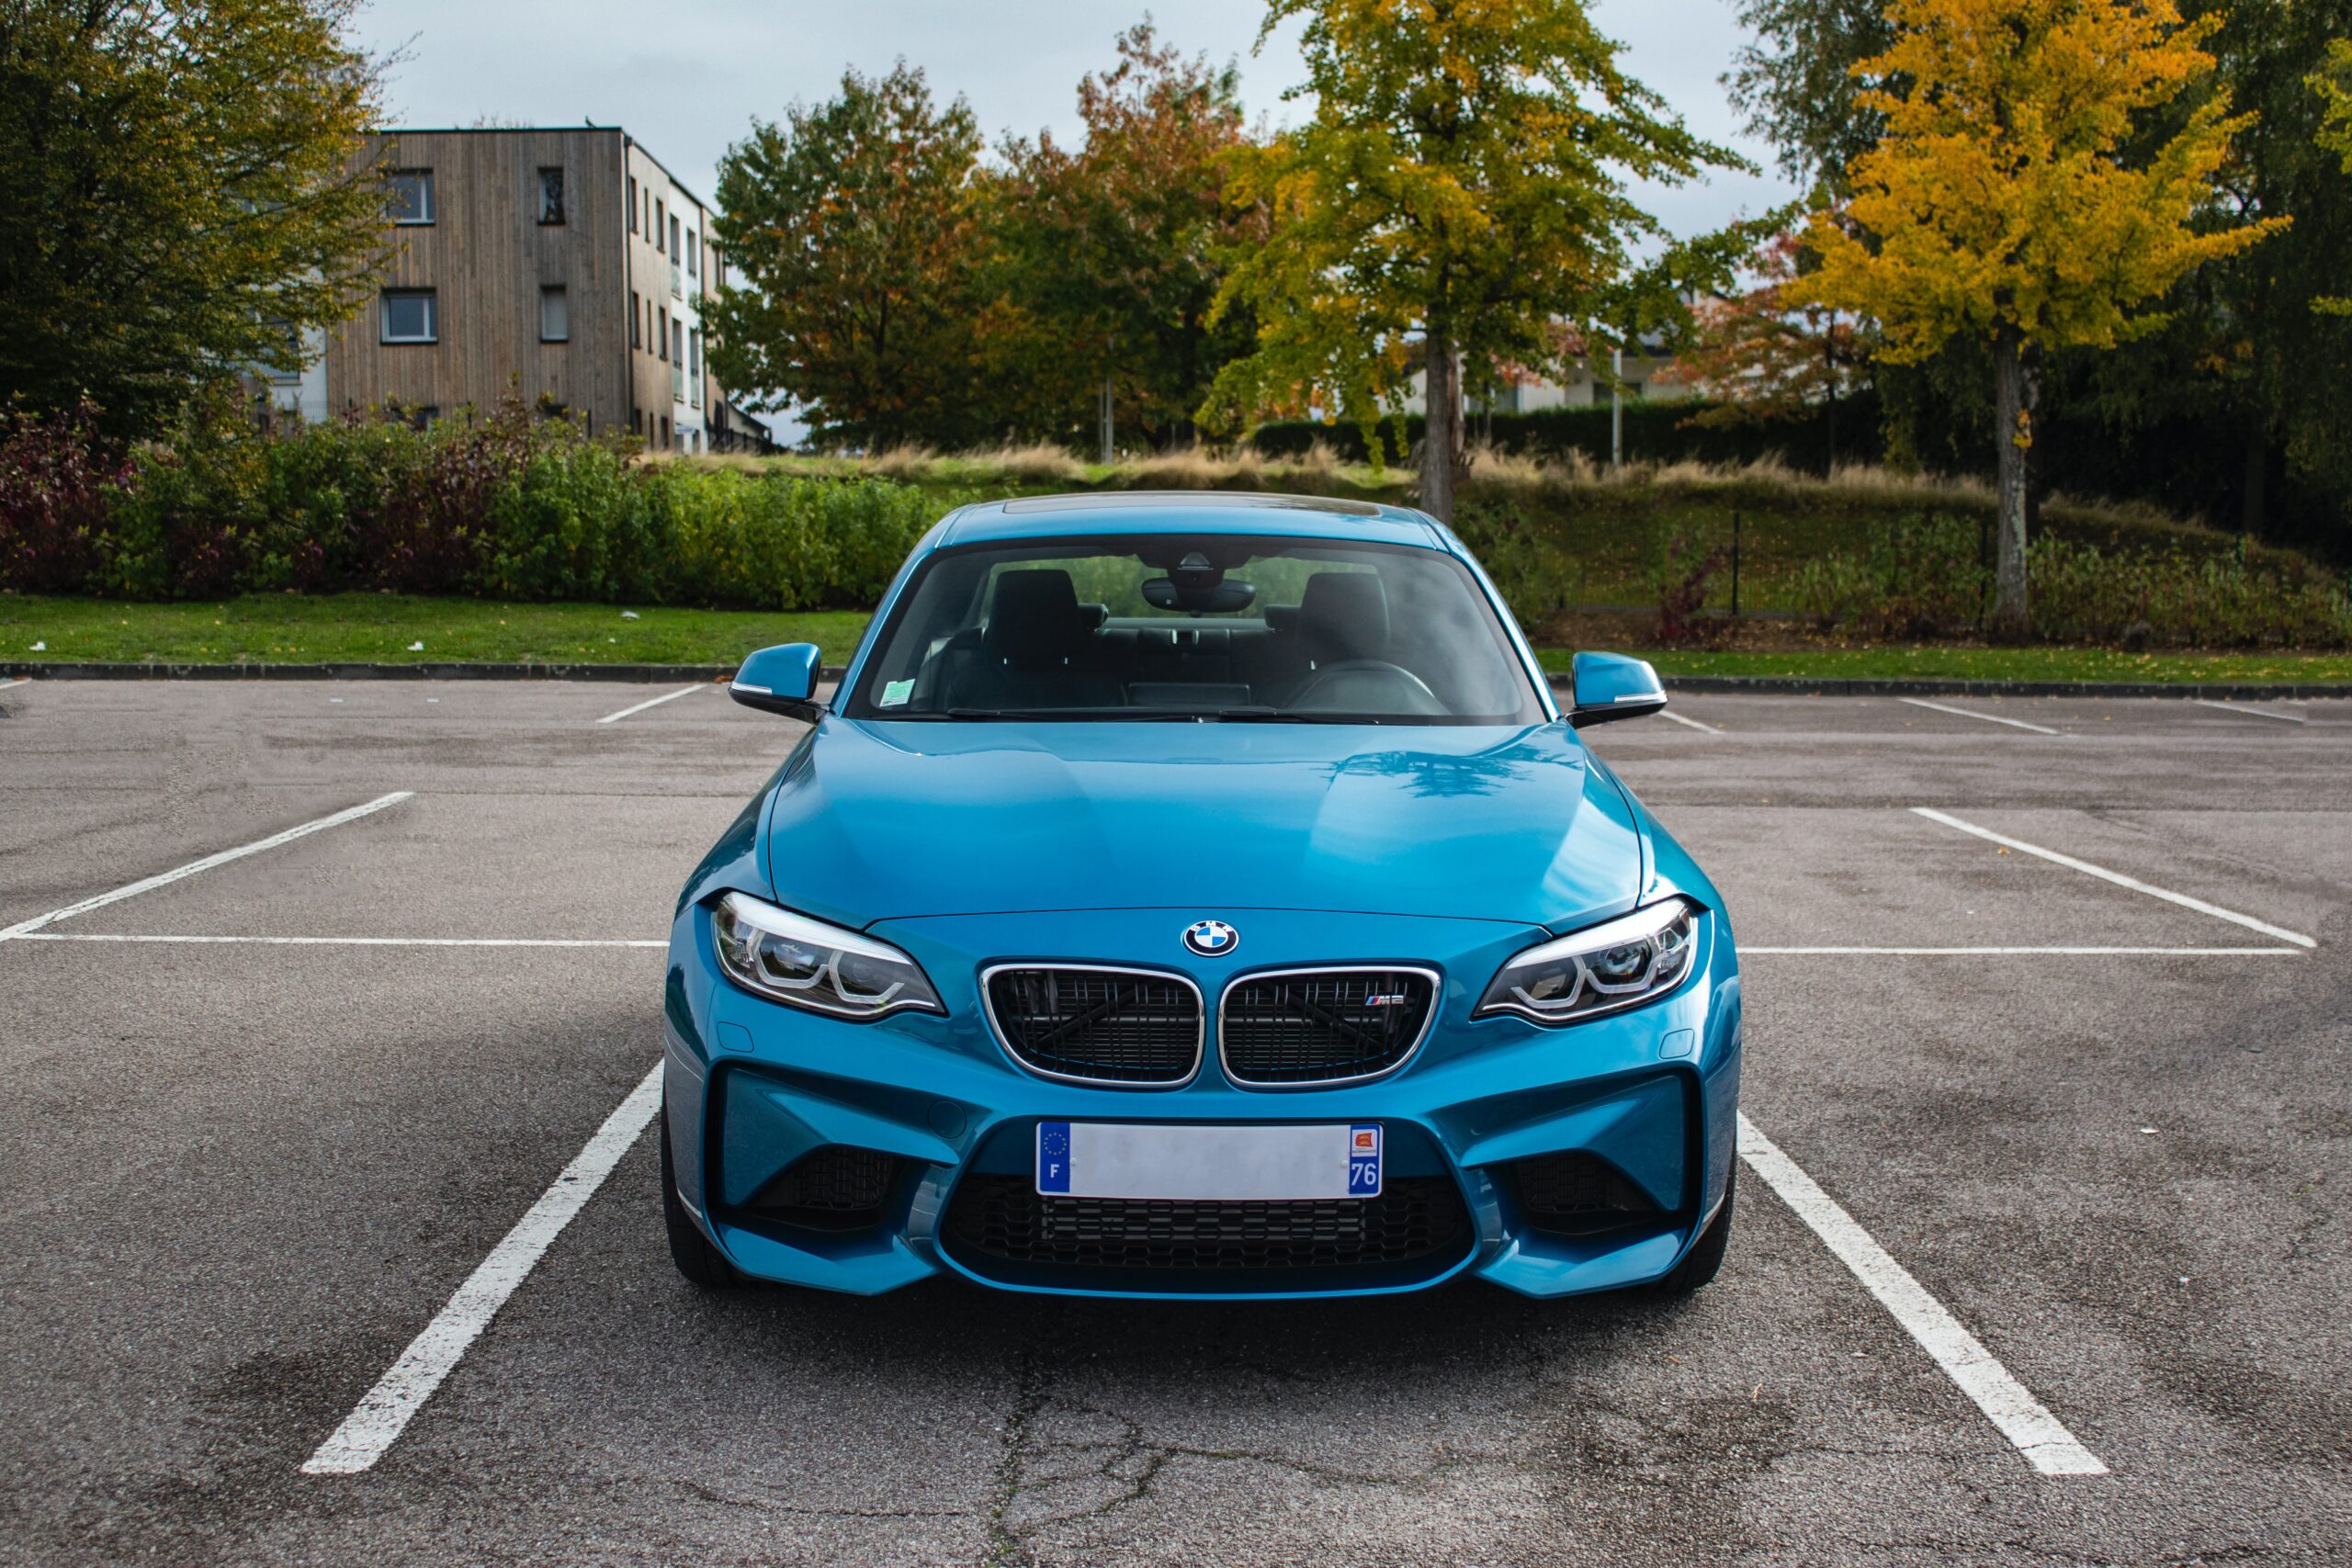 BMW showed the new i4 sports sedan